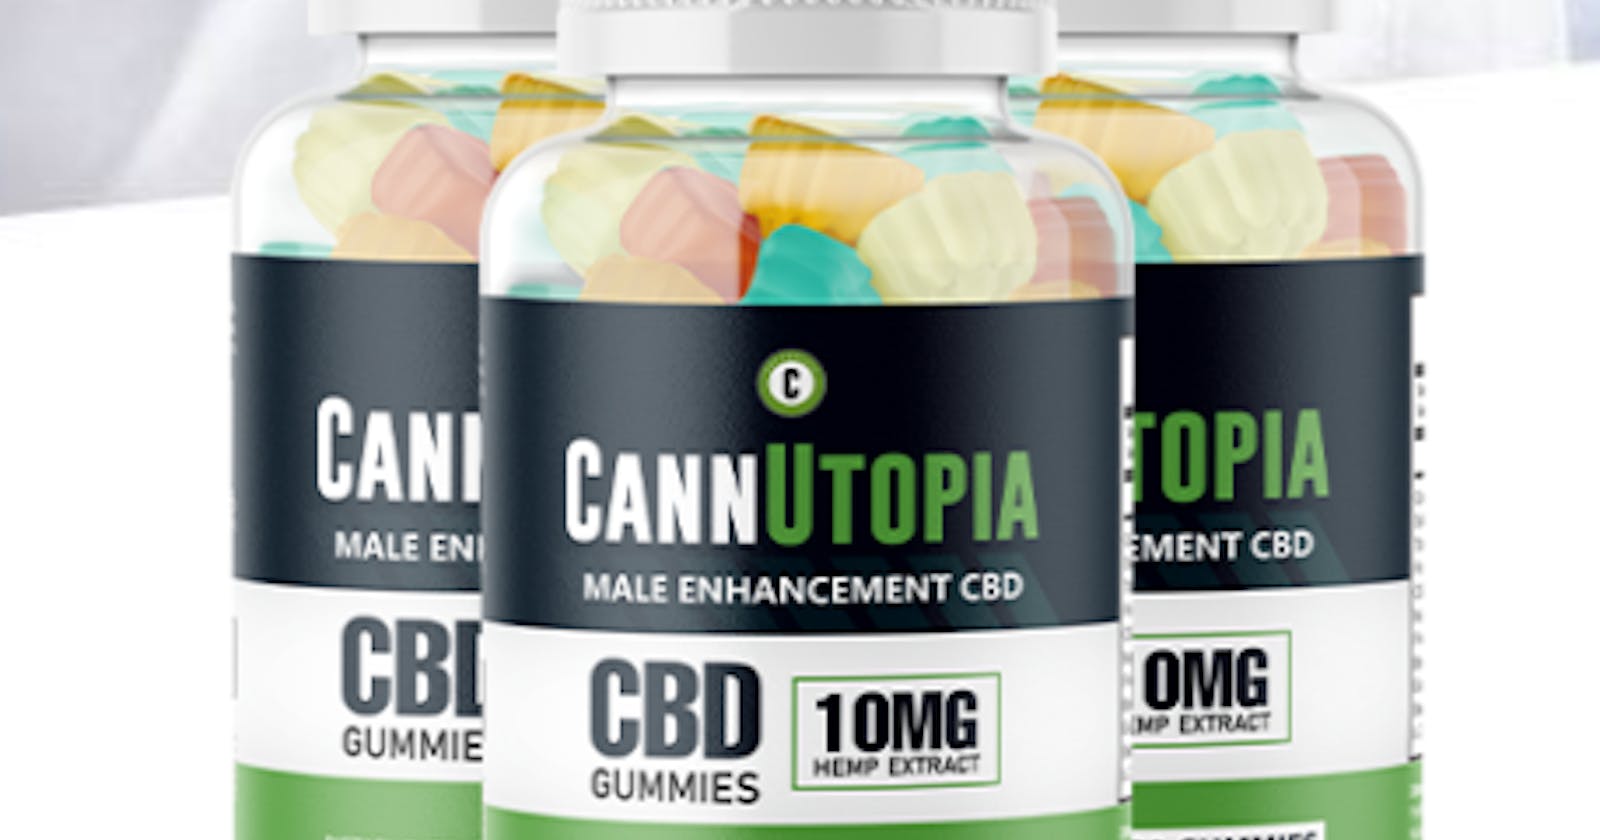 CannUtopia Male Enhancement CBD Side Effects